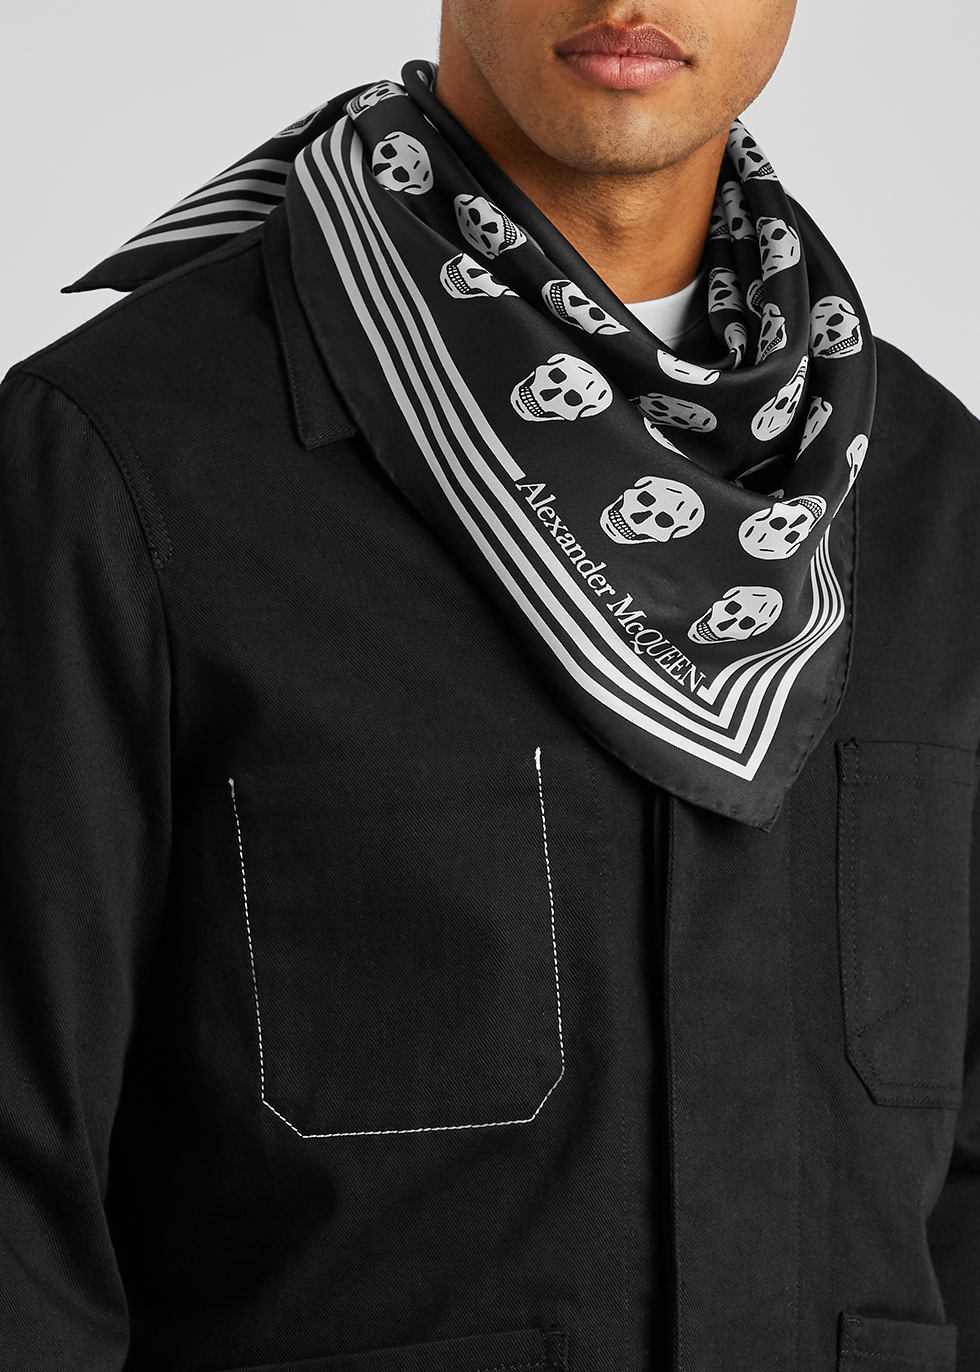 Alexander McQueen Men's Skull-Print Silk Scarf - ShopStyle Scarves